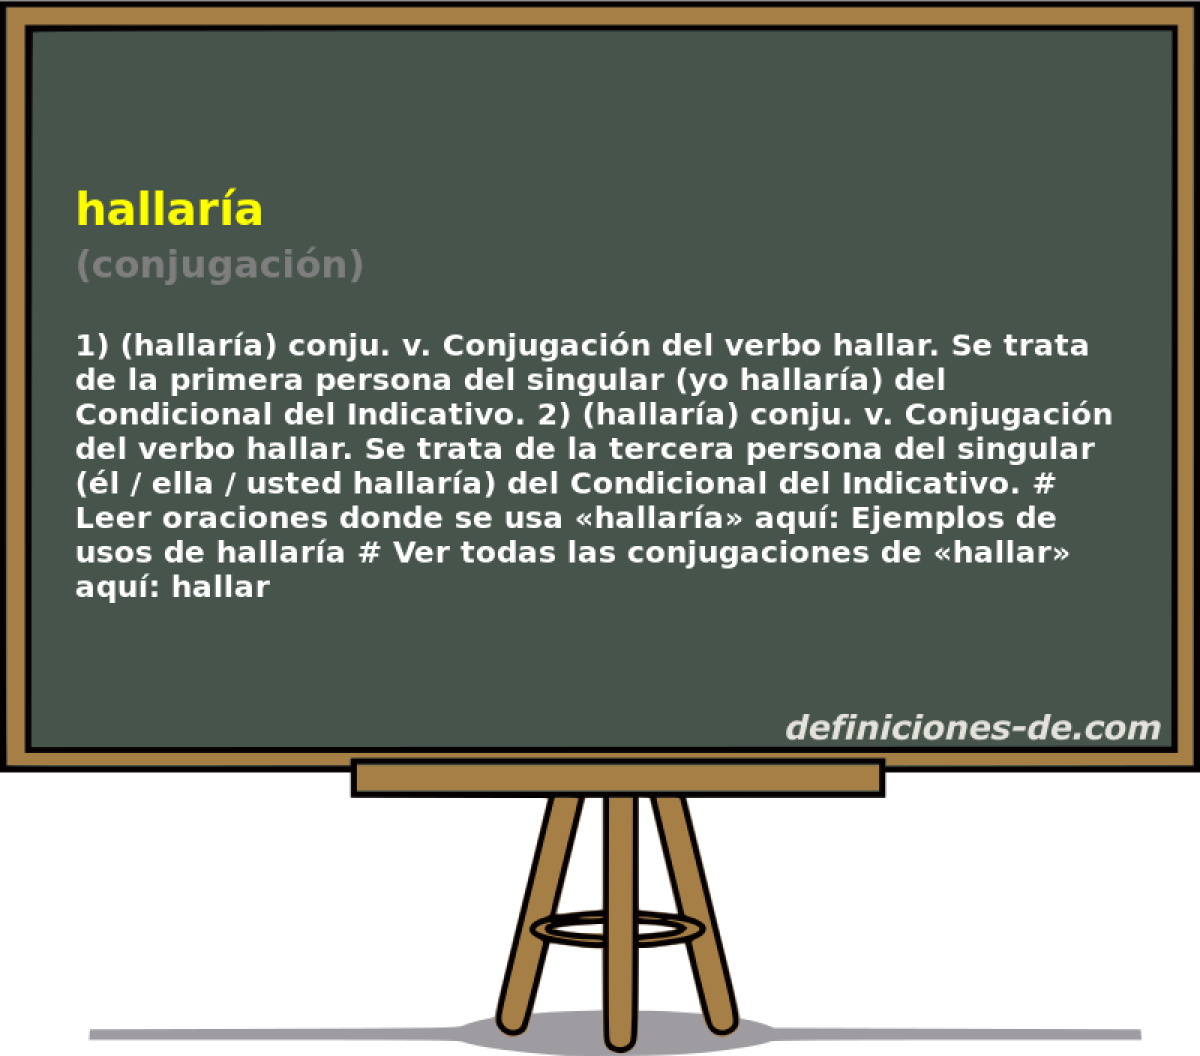 hallara (conjugacin)